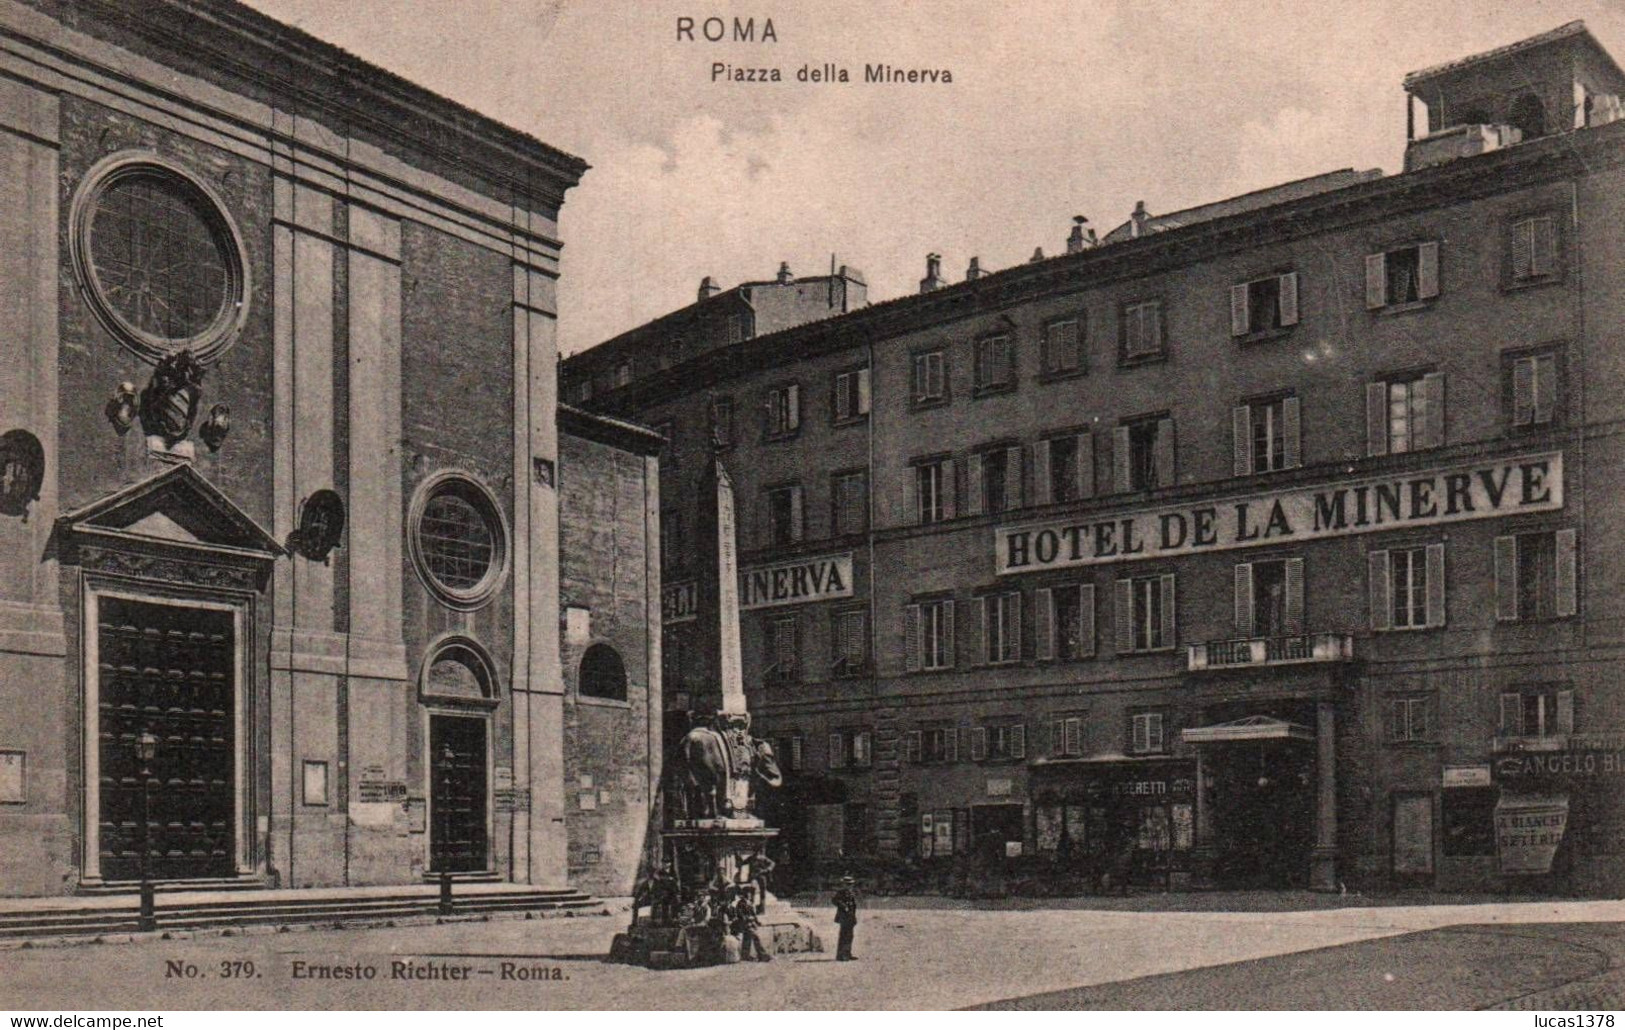 ROMA / PIAZZA DELLA MINERVA / HOTEL DE LA MINERVE - Bares, Hoteles Y Restaurantes